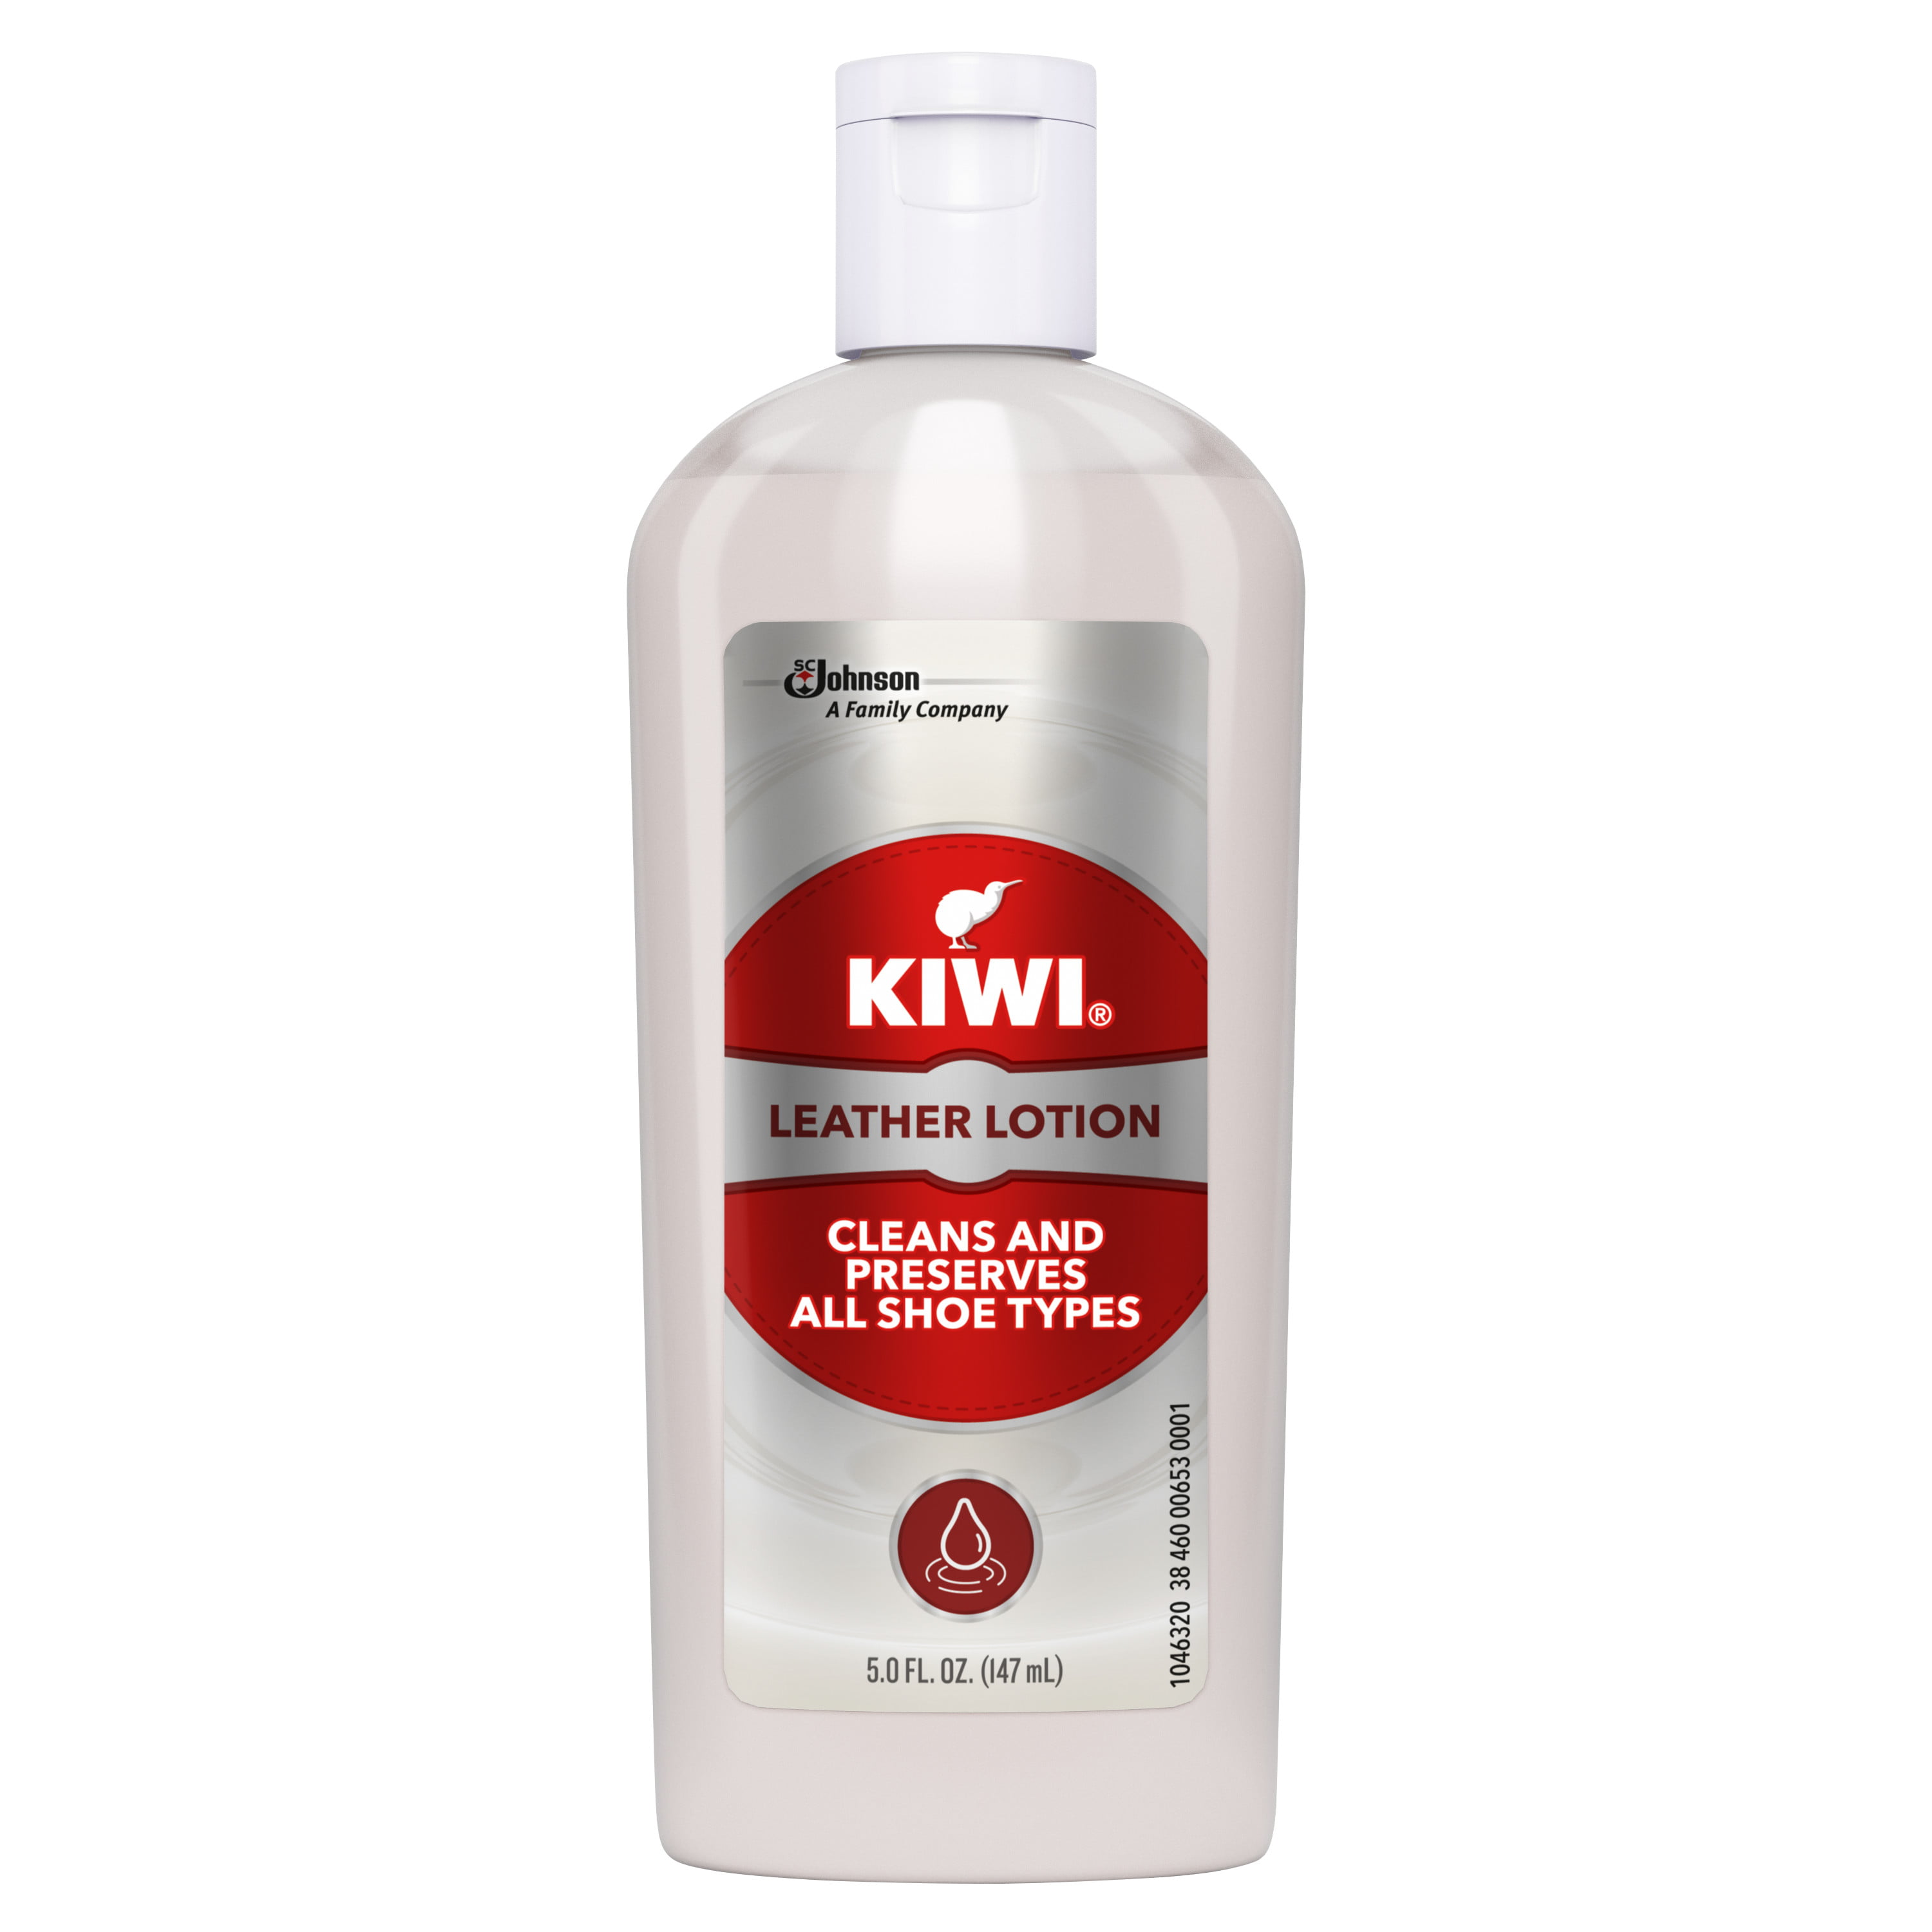 Kiwi Leather Dye Black Bottle With Sponge Applicator - 2.5oz : Target